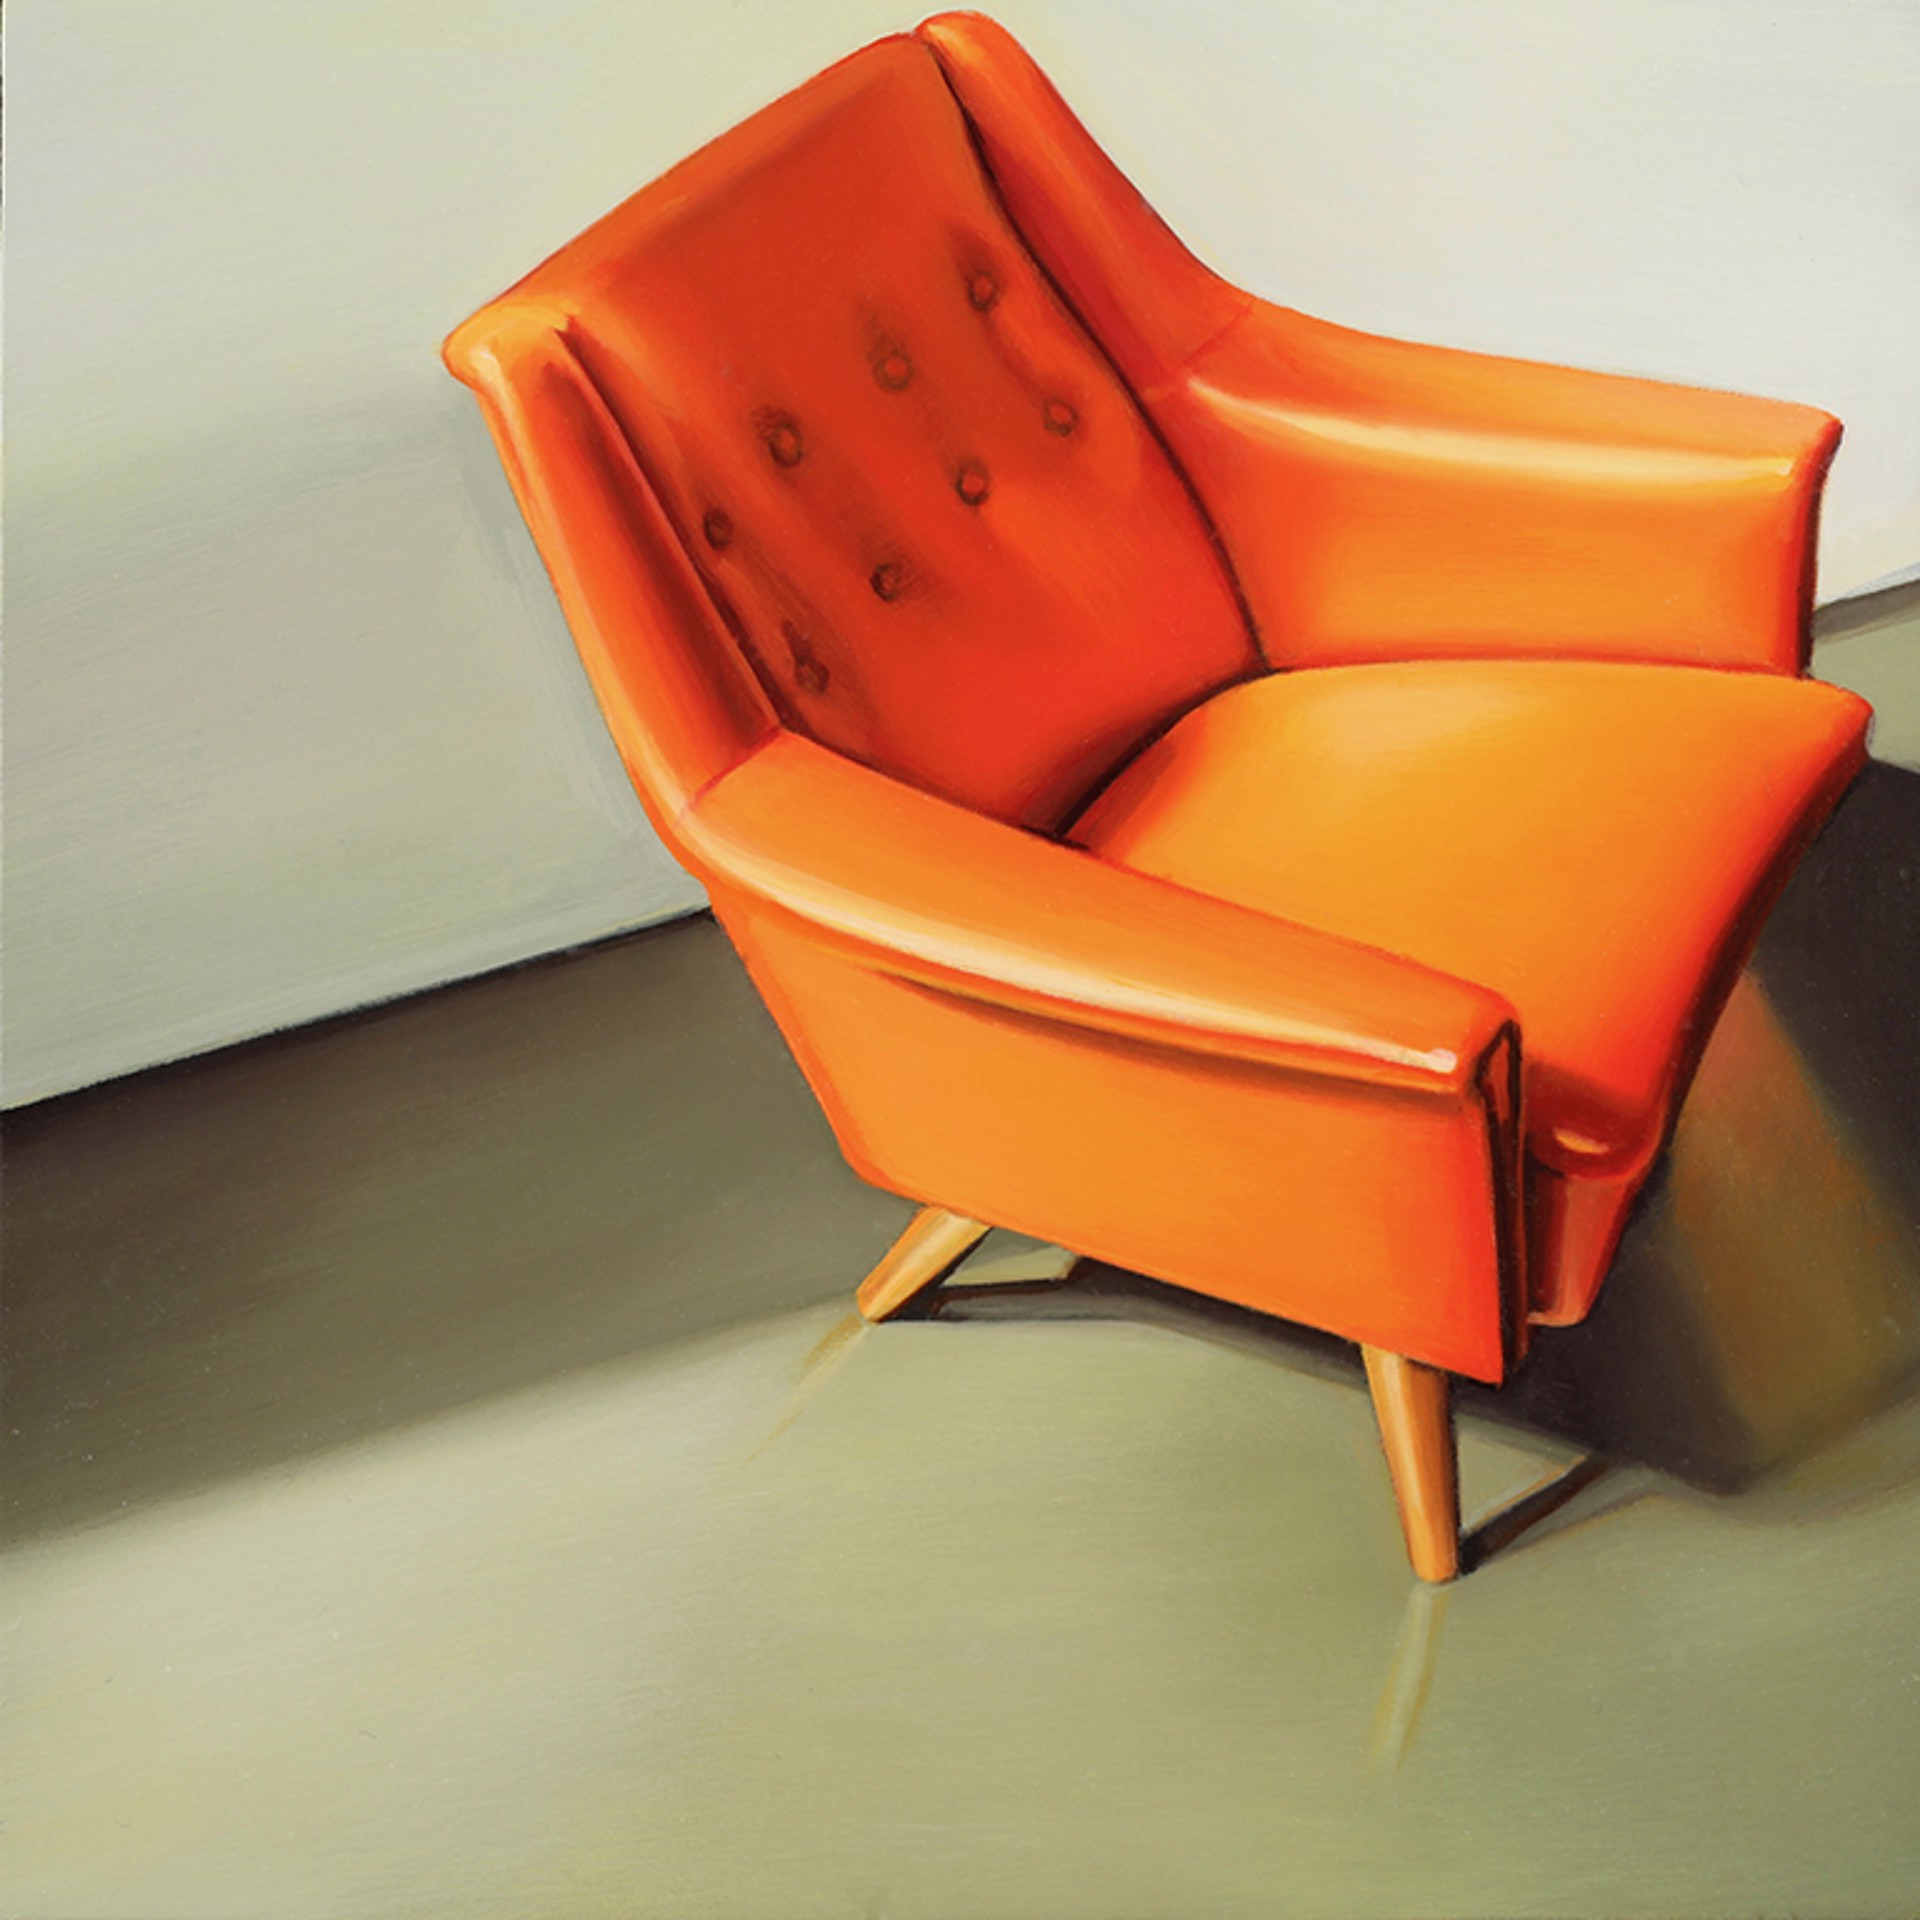 Berkeley Chair #3 by Ada Sadler